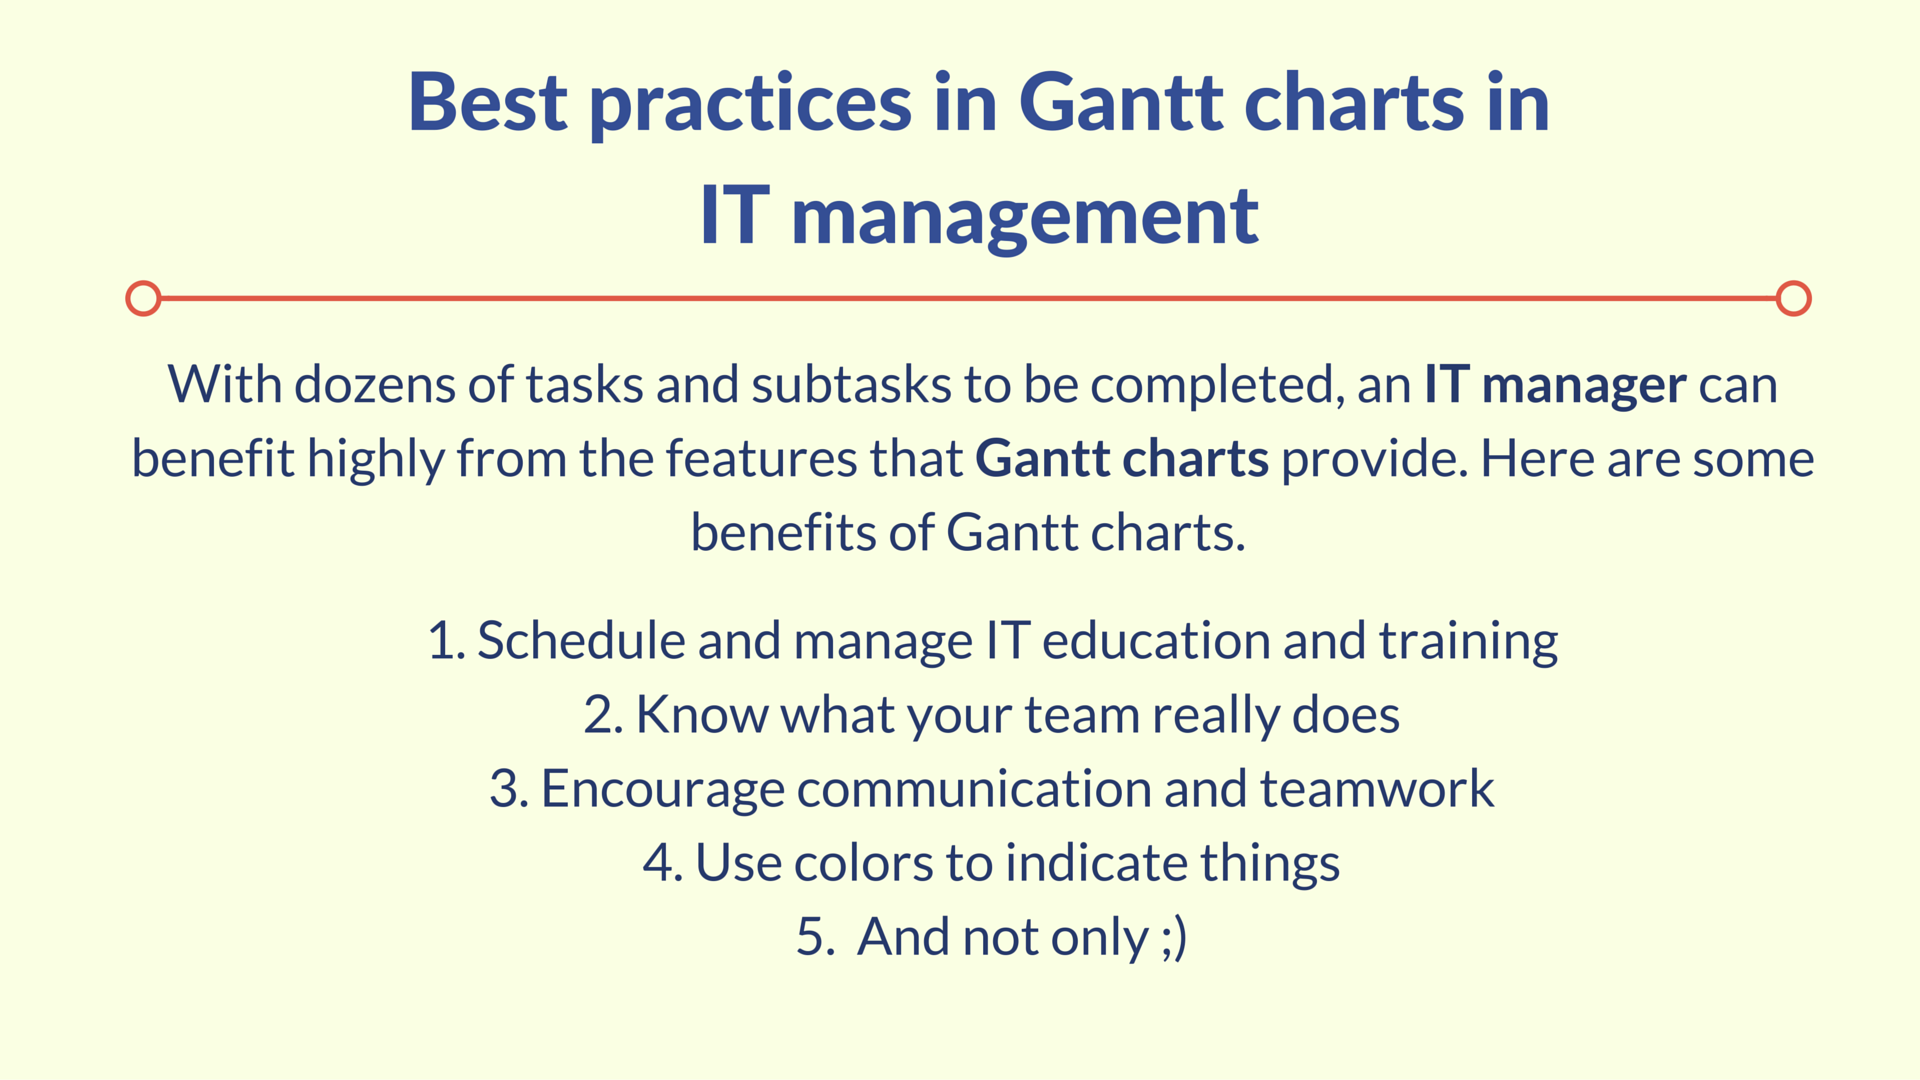 Gantt chart in IT management